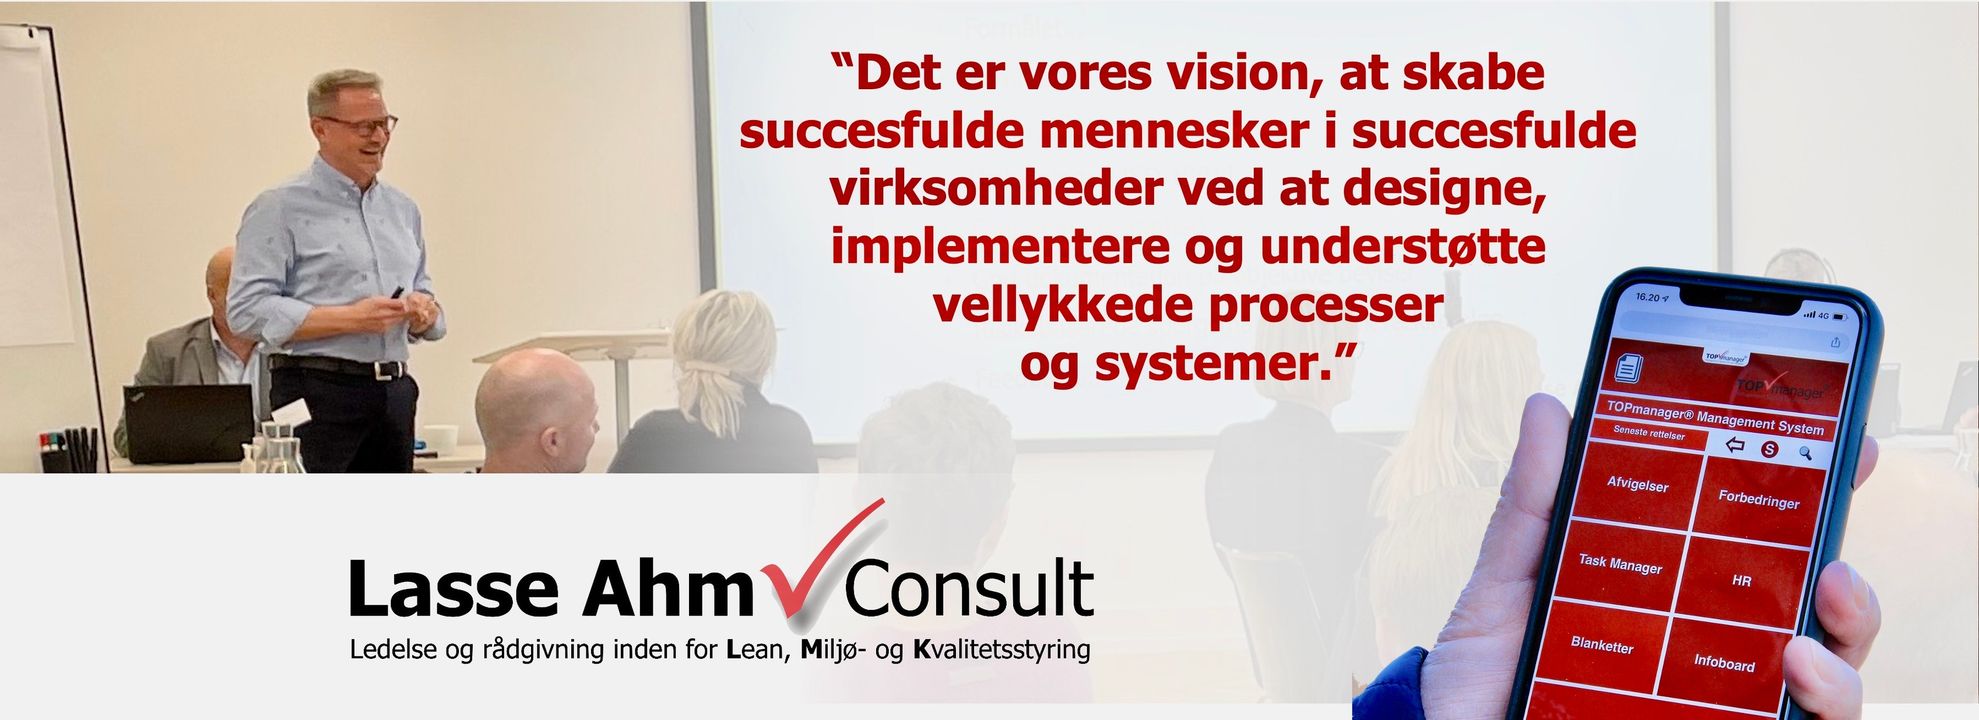 Vi søger en dygtig konsulent med erfaring i opbygning ledelsessystemer - ISO 9001, 14001, FSSC 22000 - Lasse Ahm Consult